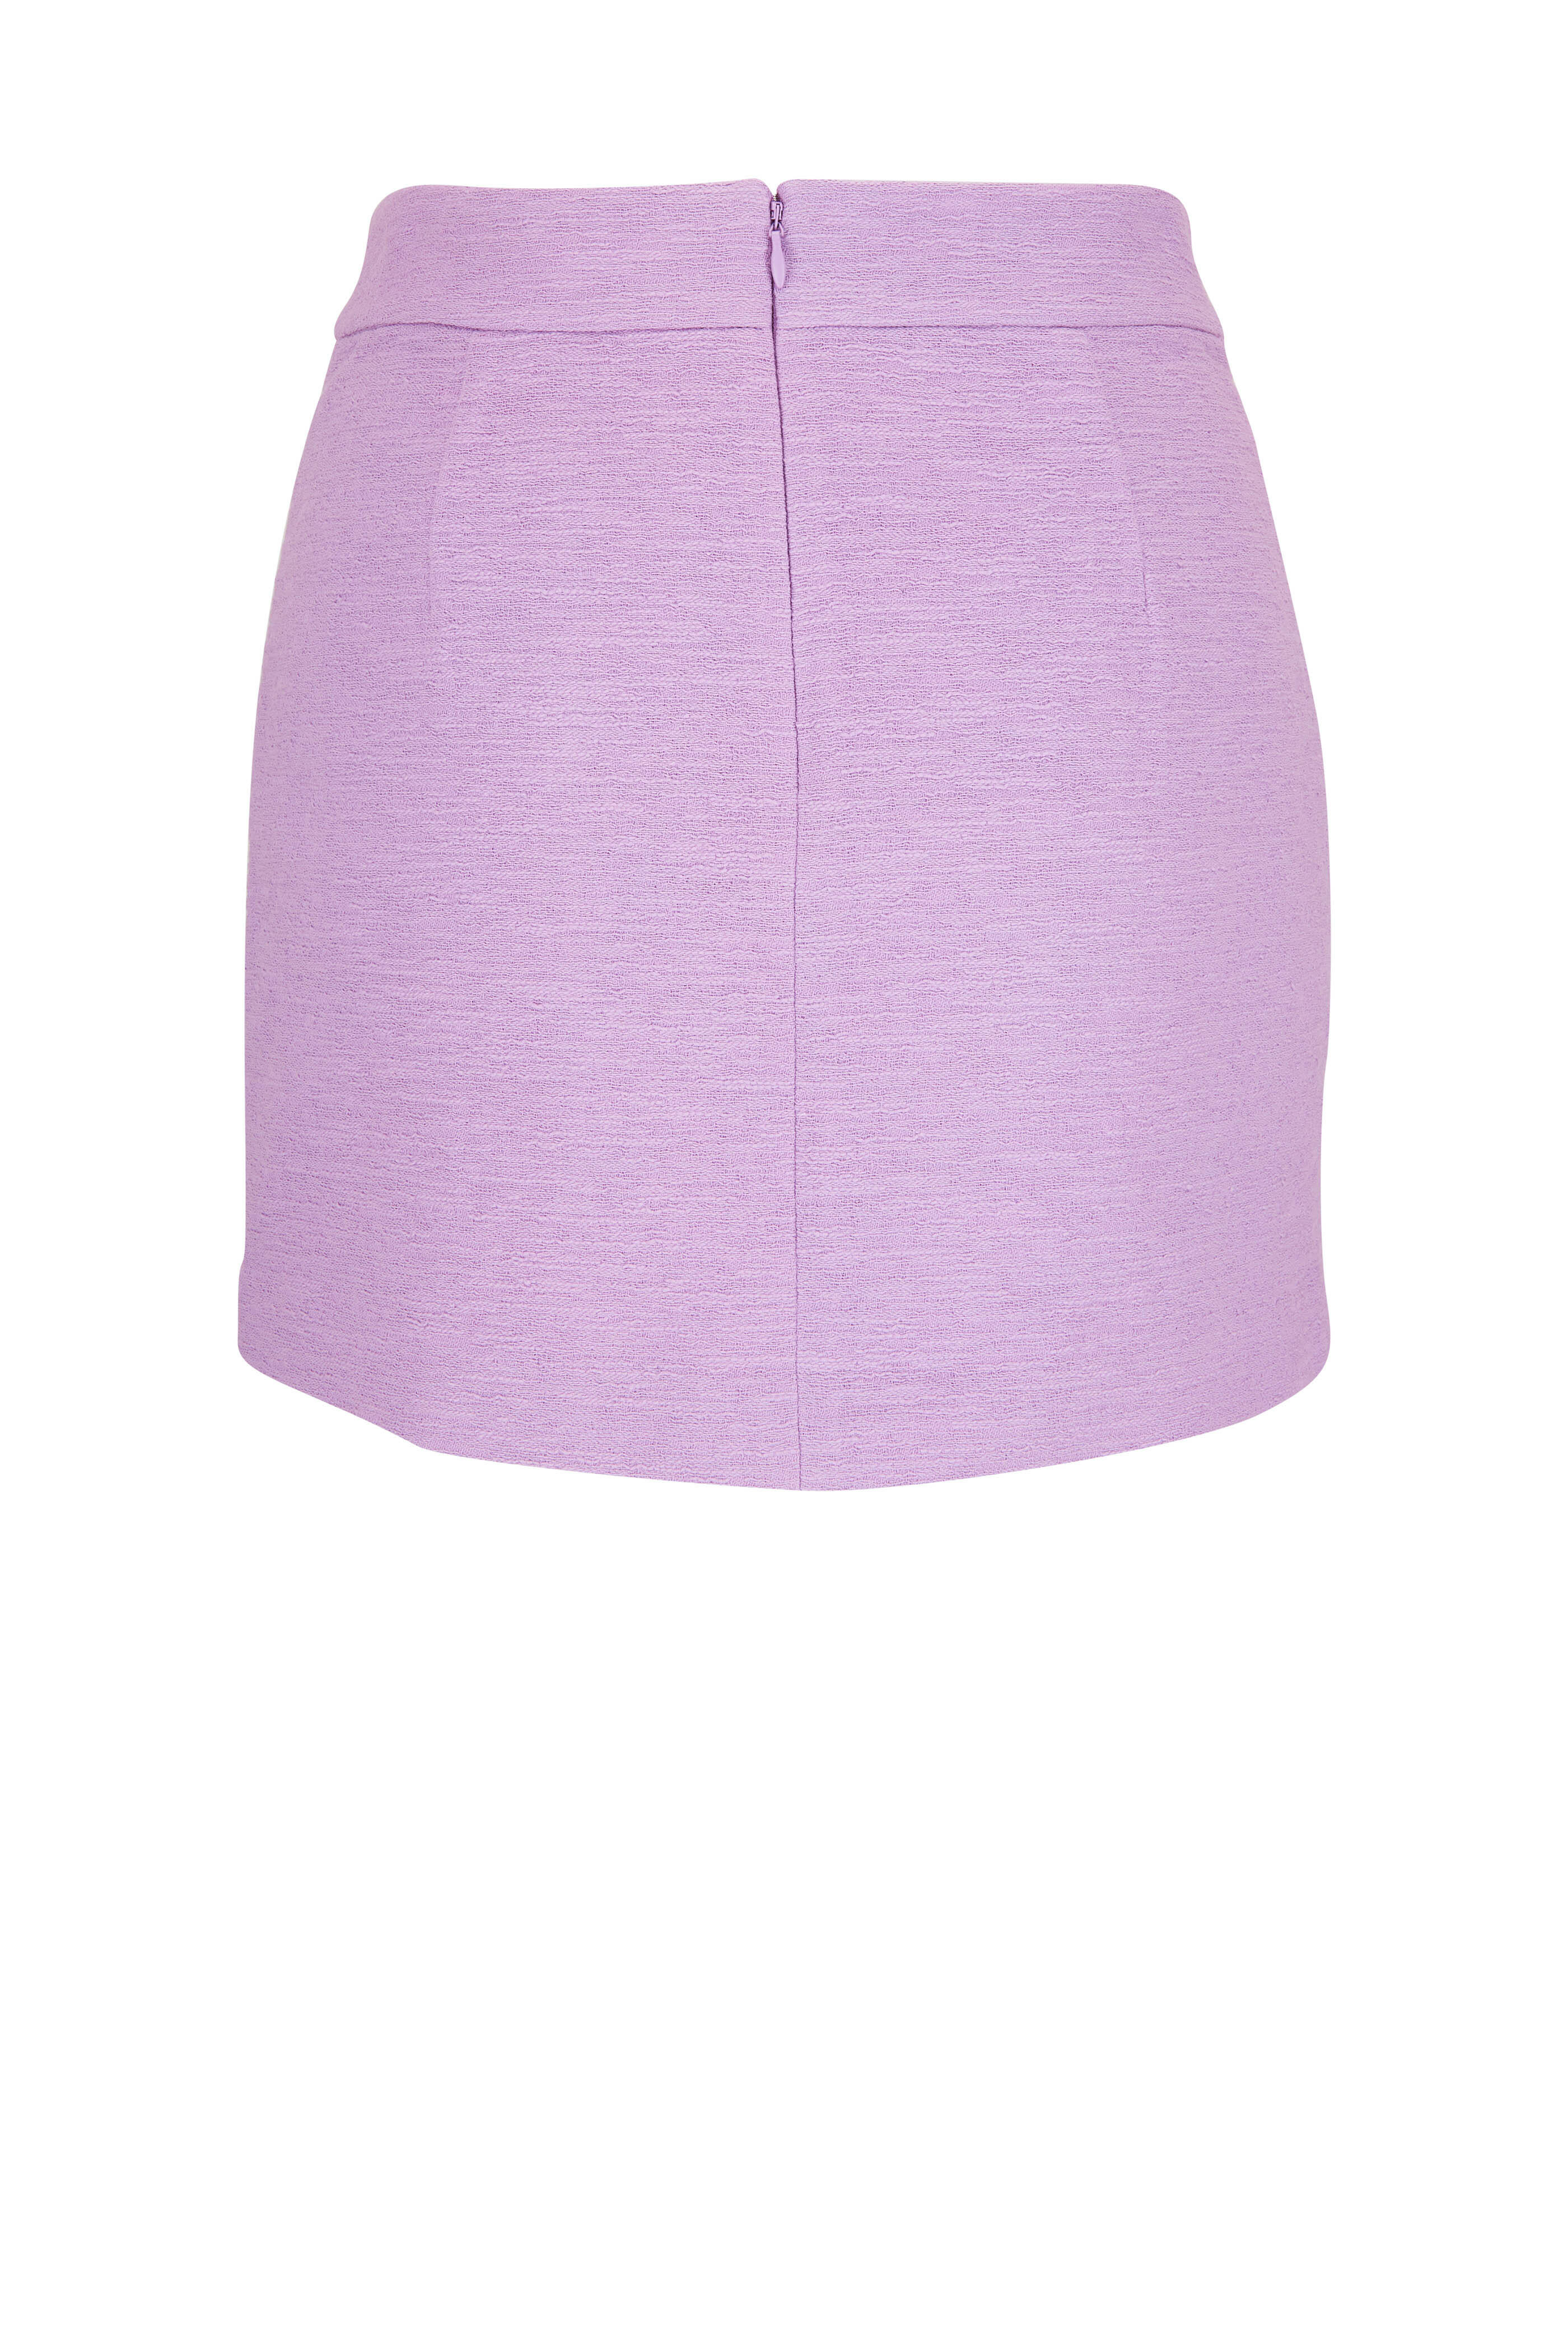 Veronica Beard - Emar Violet Mini Skirt | Mitchell Stores